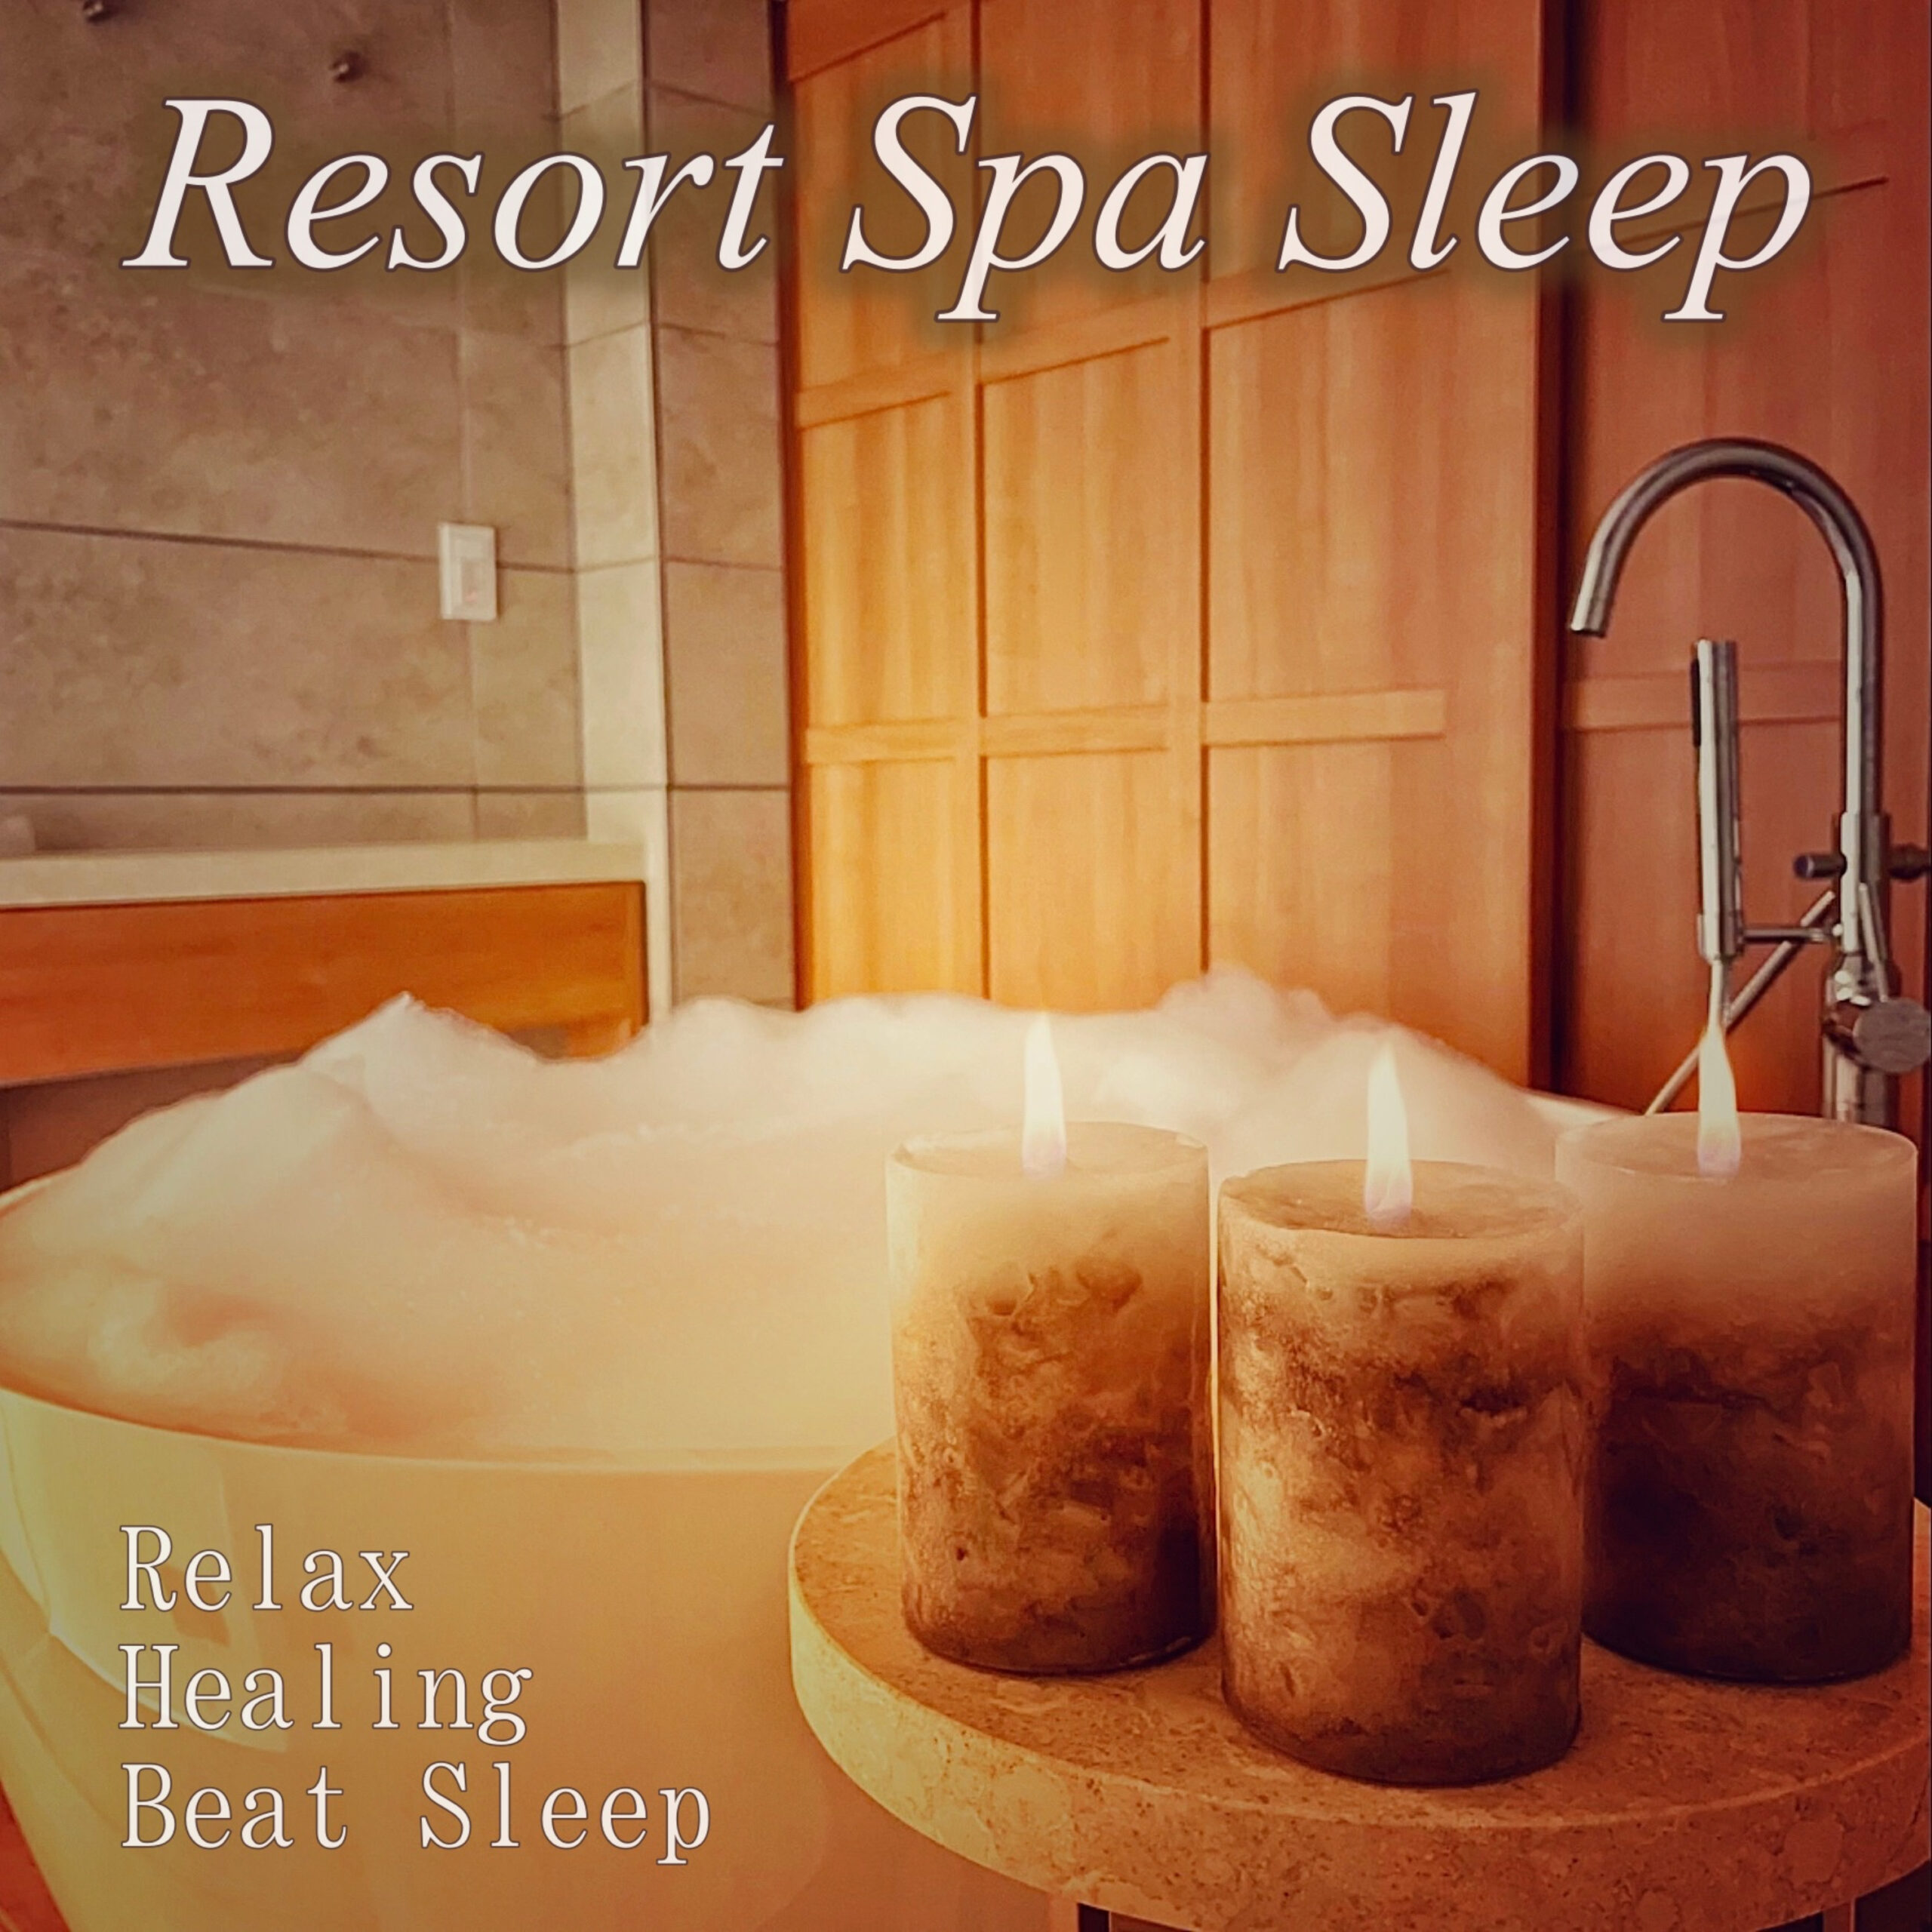 Resort Spa Sleep Relax Healing Best Sleep 聴いているだけで癒されるベルの音とアンビエントの睡眠導入音楽 まるでアロマスパにいるようなリゾートスパミュージック 睡眠の質を高め自律神経を整える